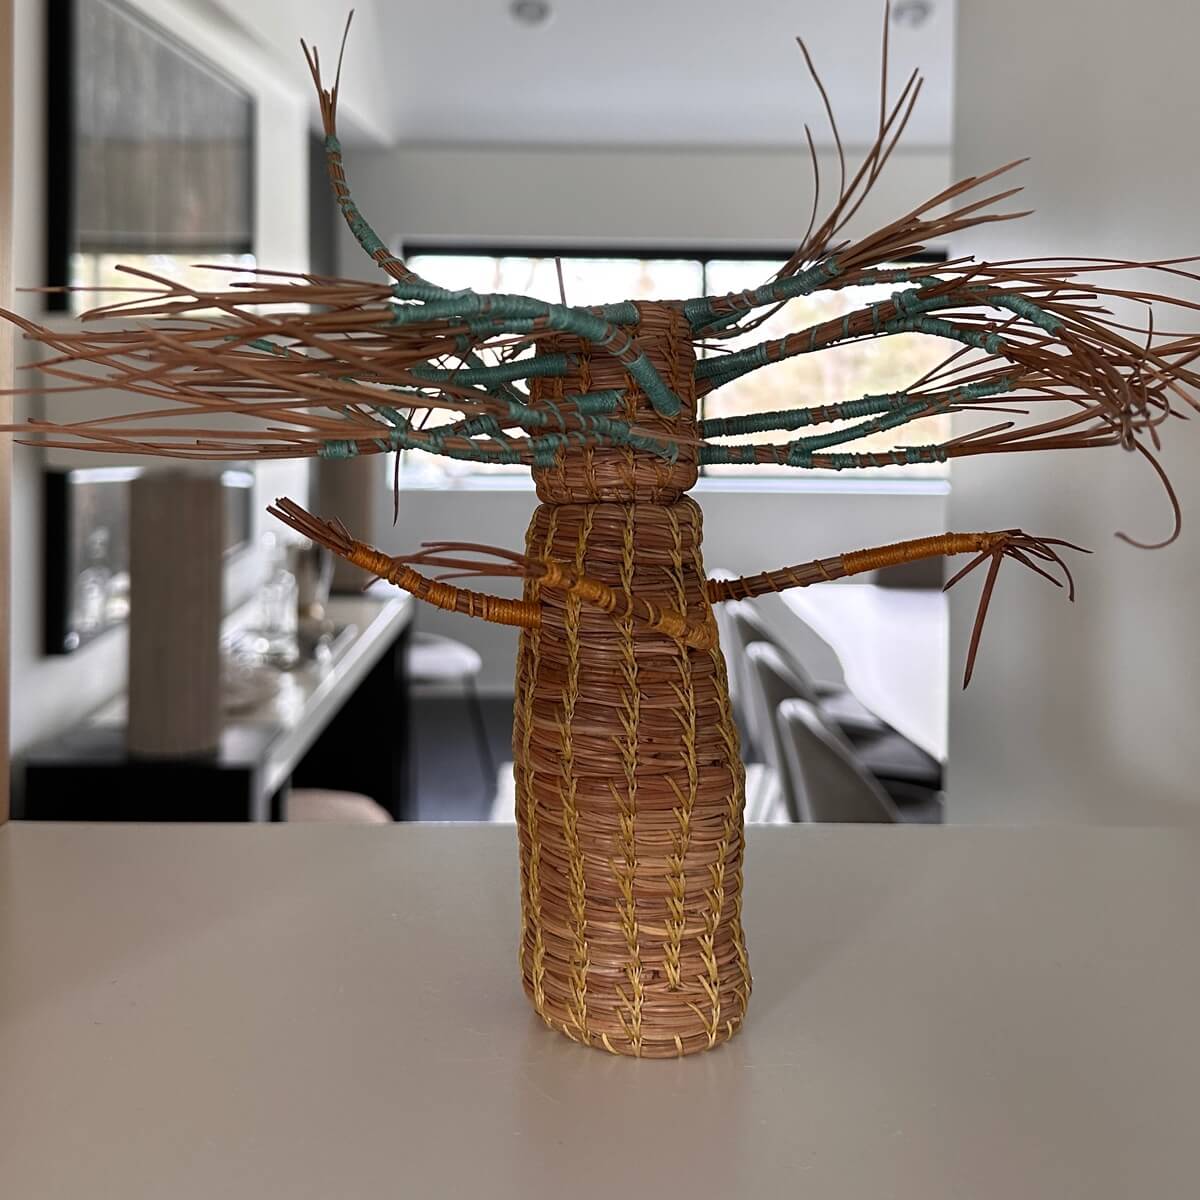 Student sculpture entitled “Twisting Tree” 